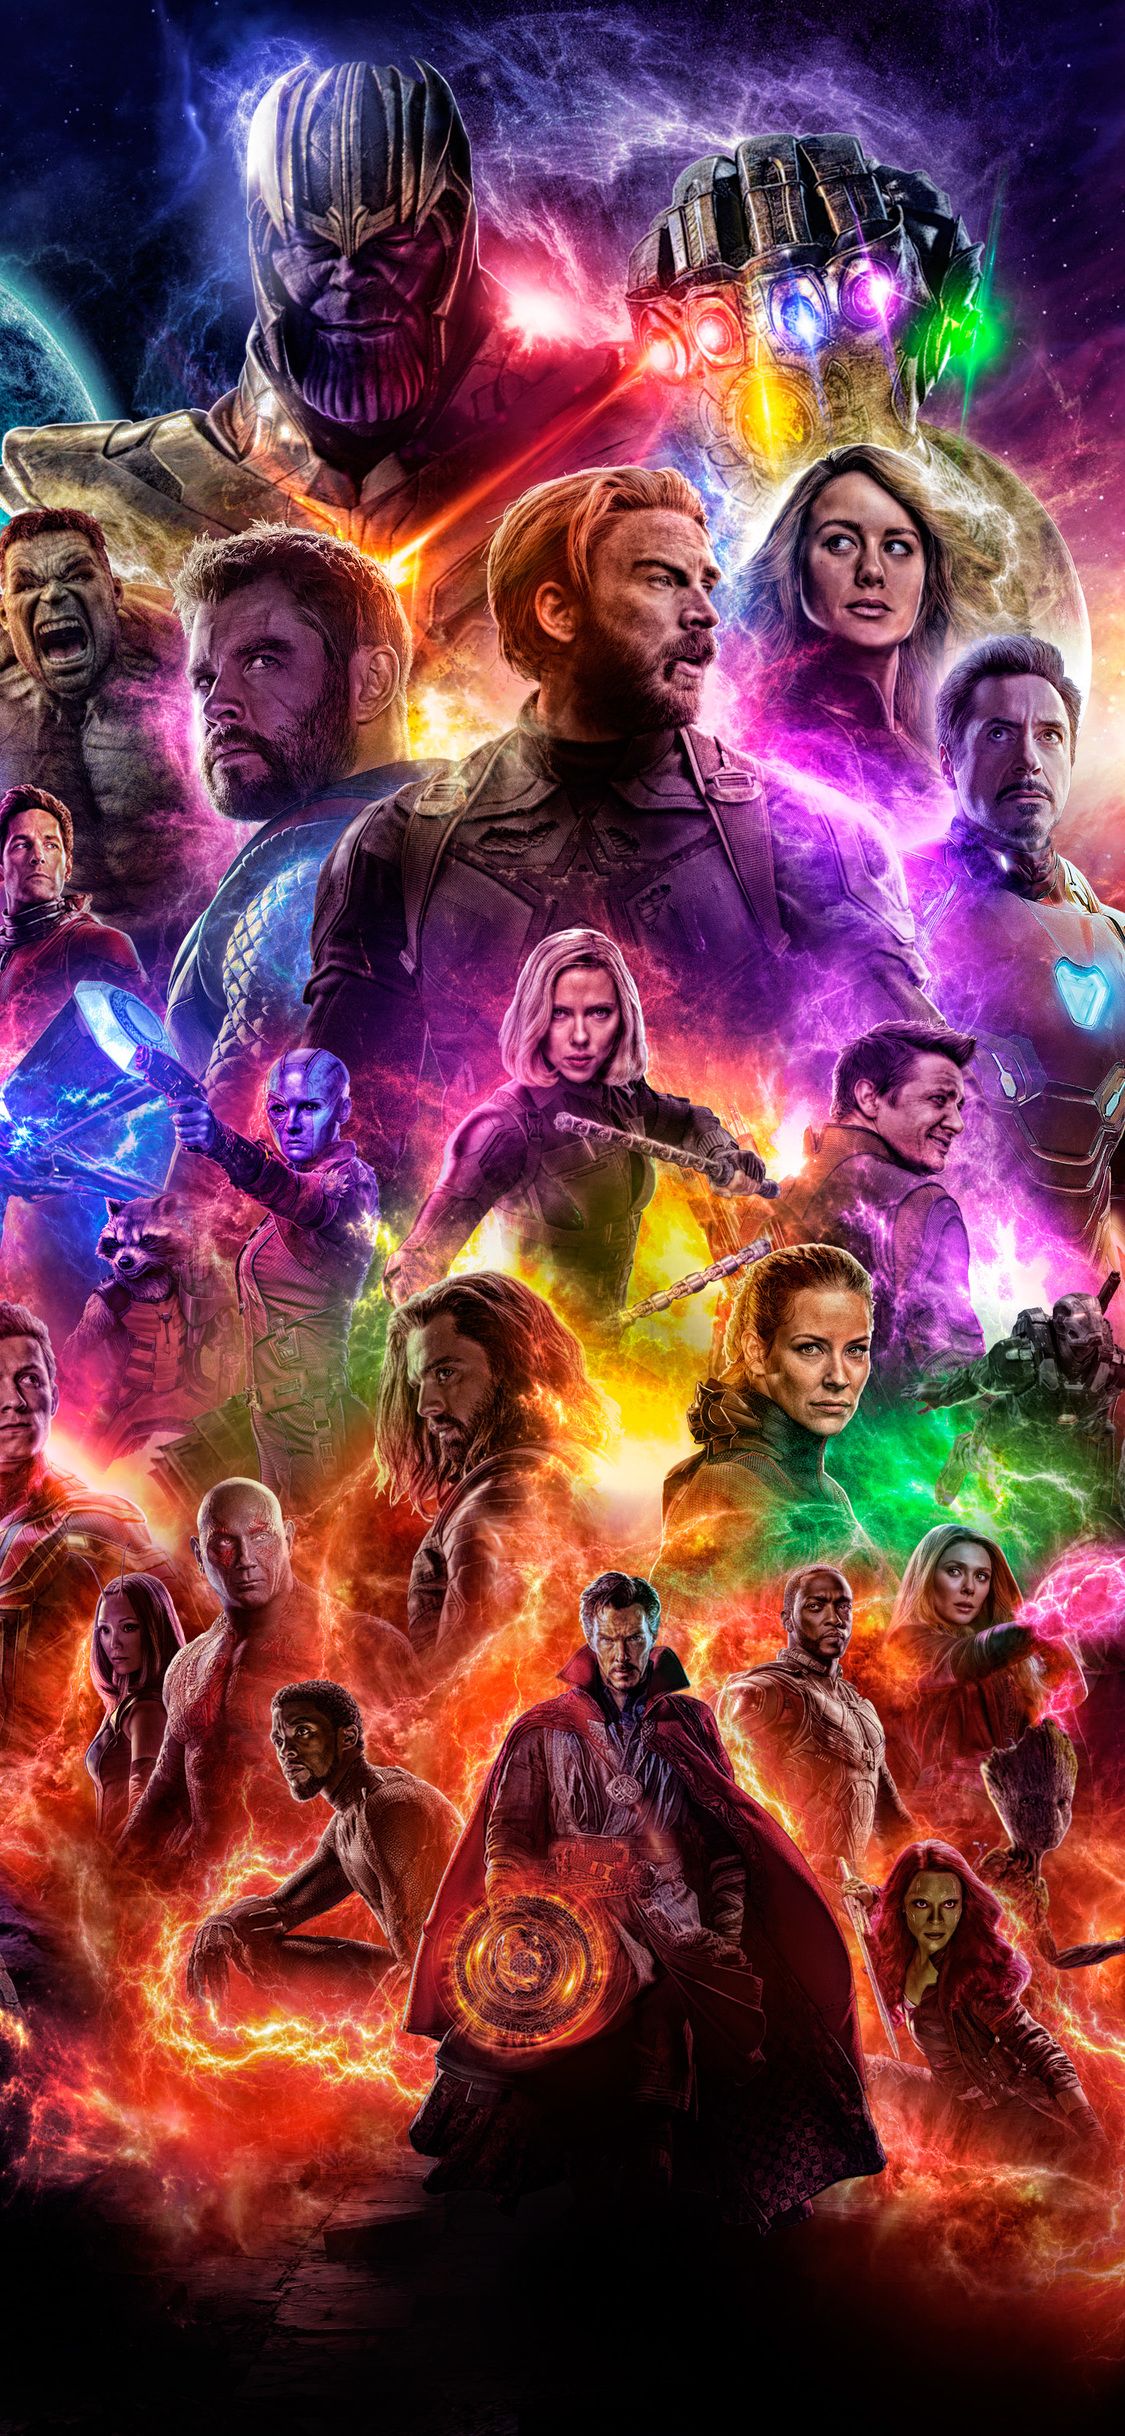 Avengers Endgame iPhone Wallpaper Large Image